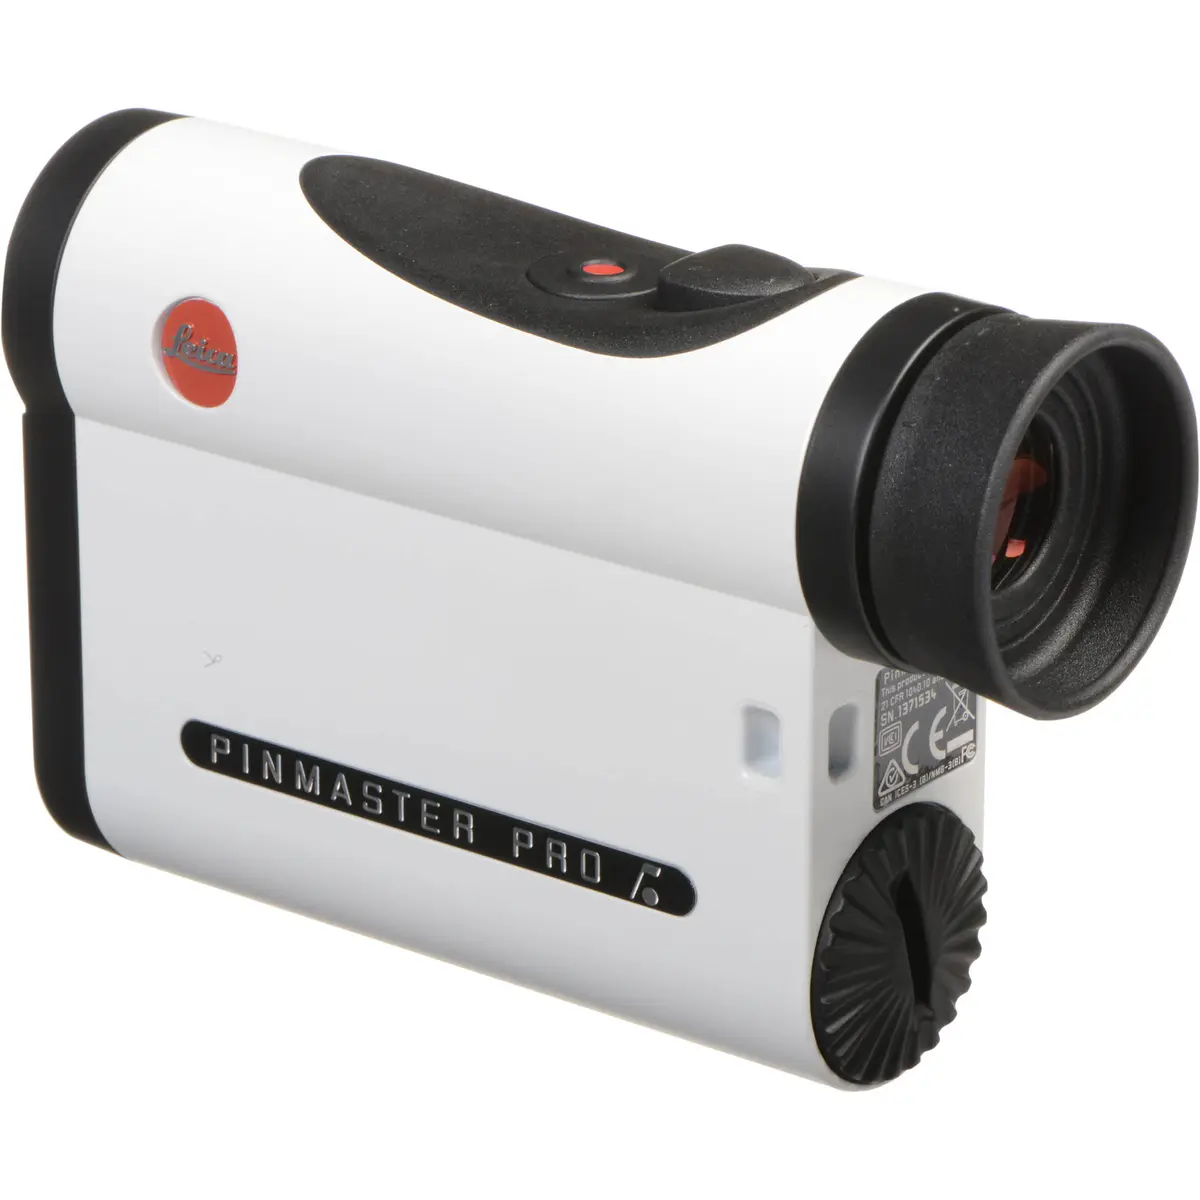 1. Leica Pinmaster II PRO Rangefinder (White) (40539)